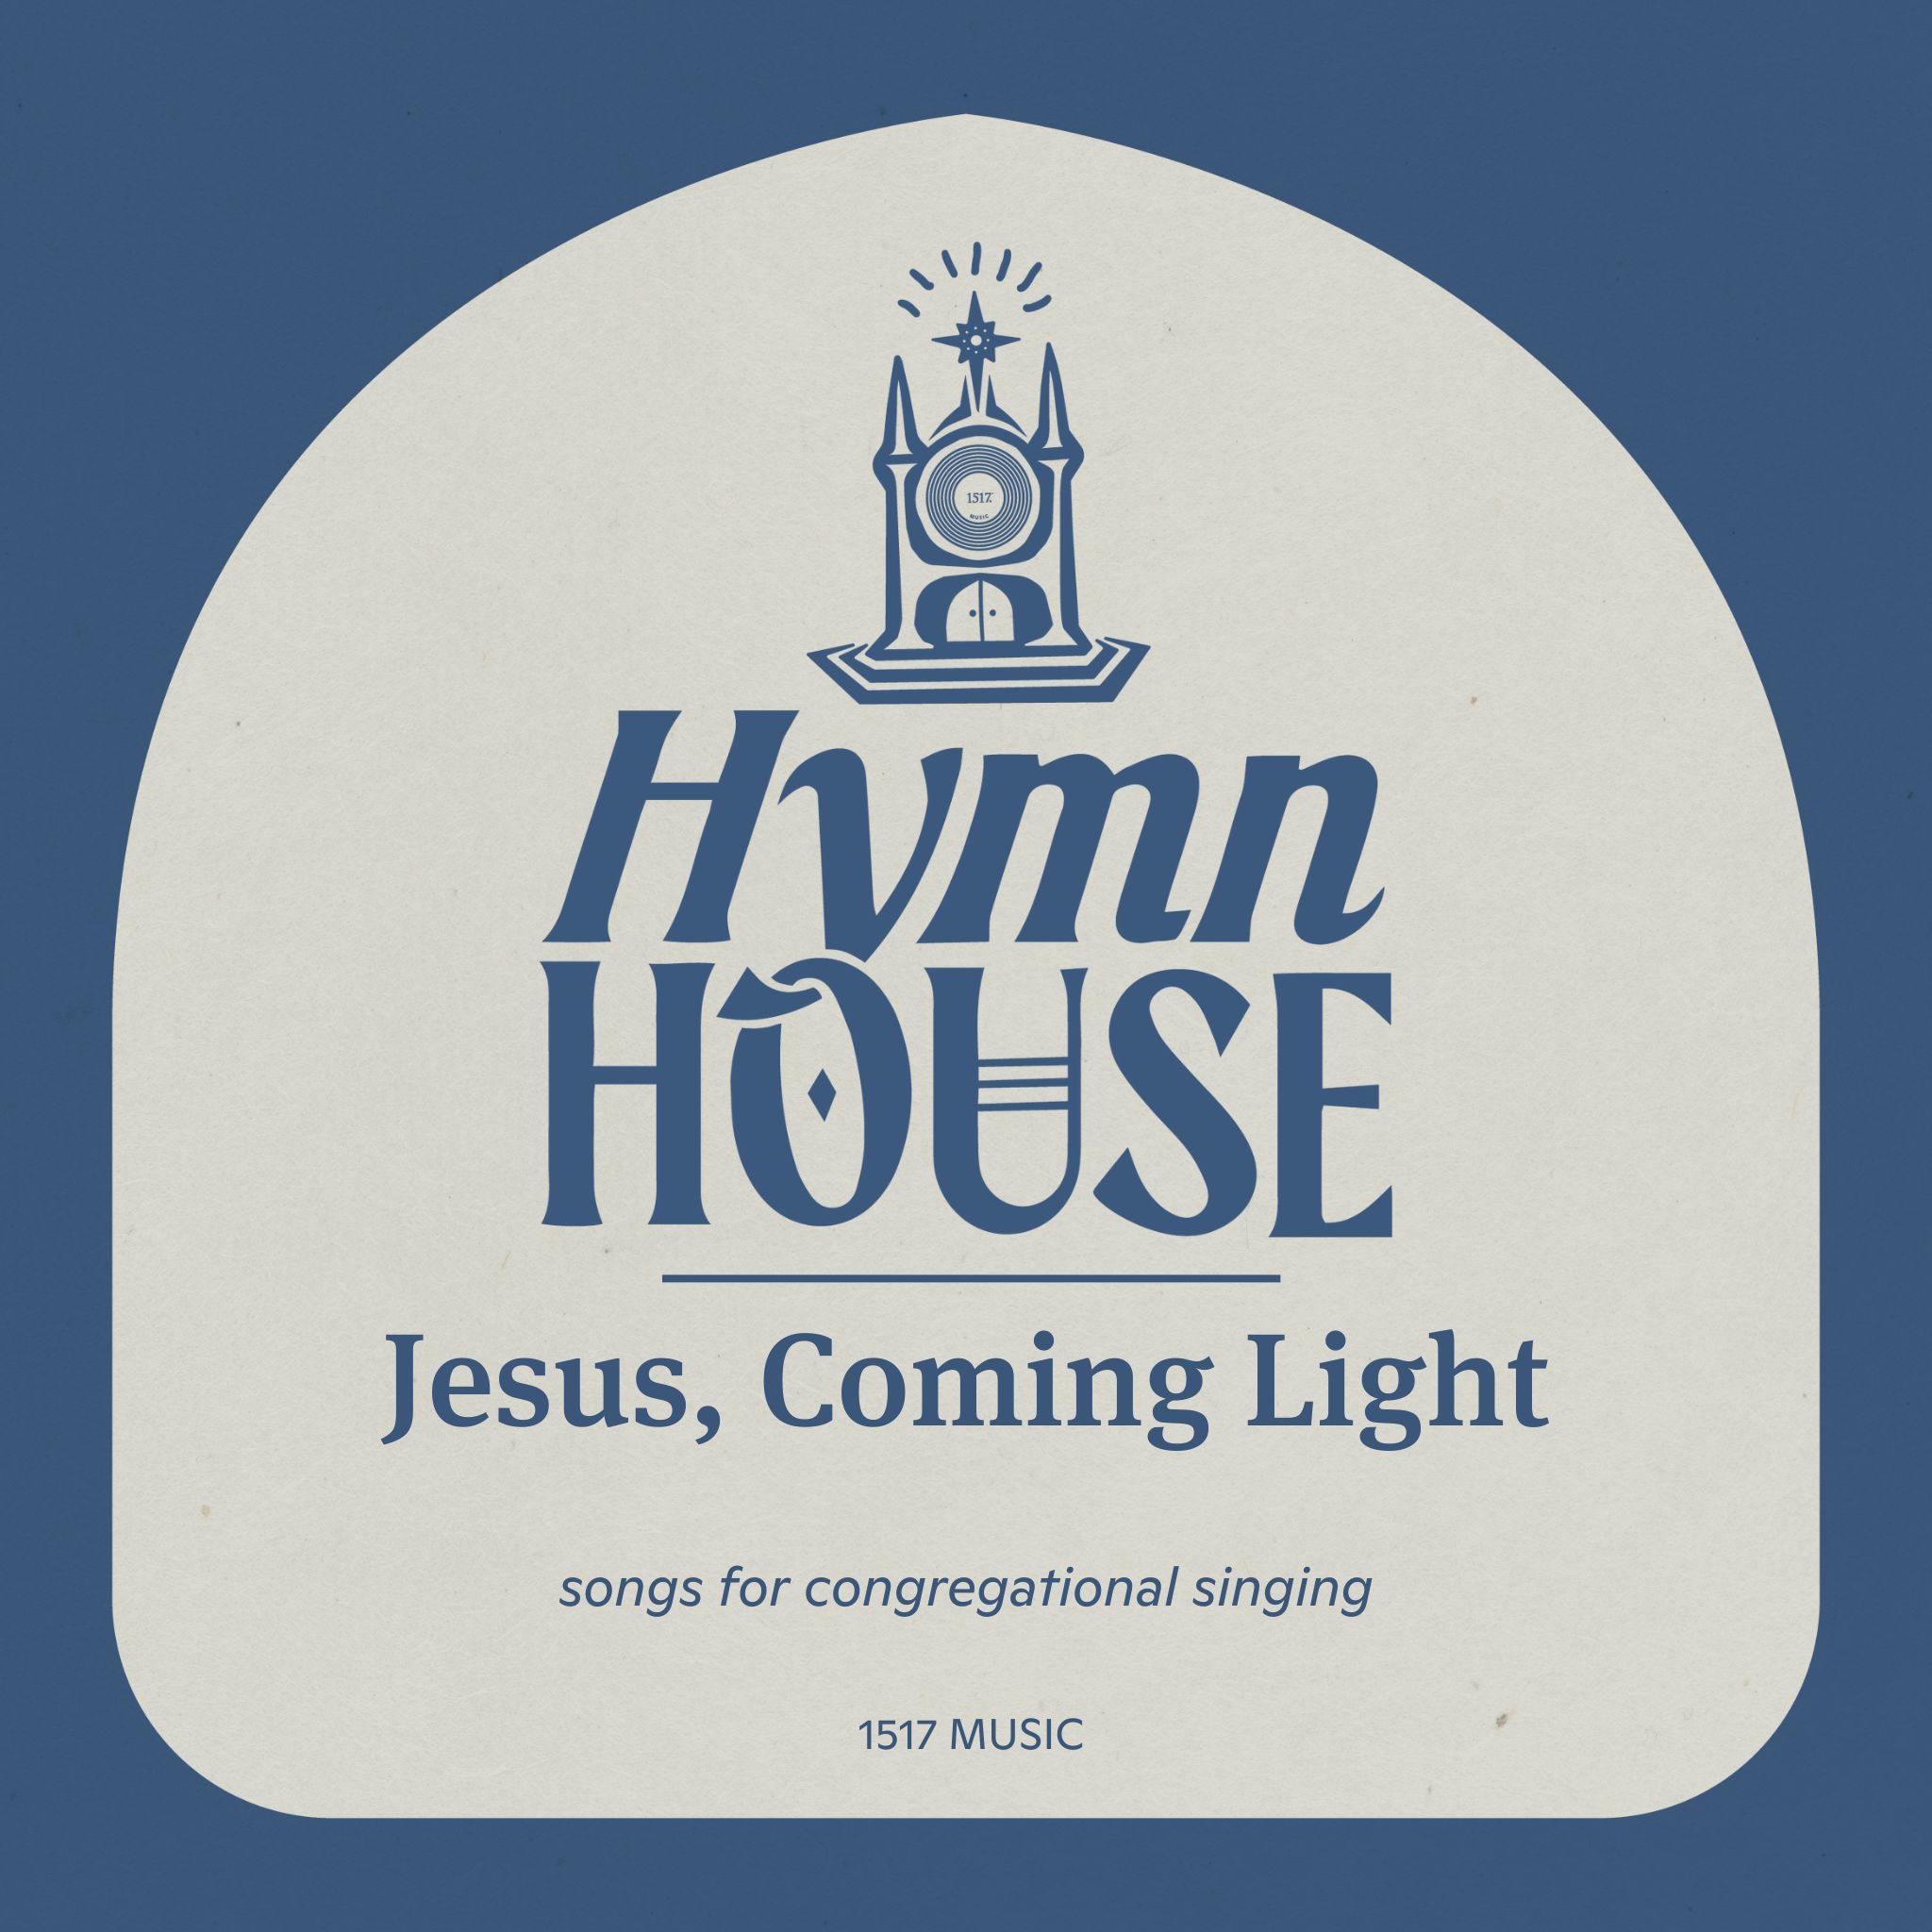 Jesus, Coming Light (Hymn House)